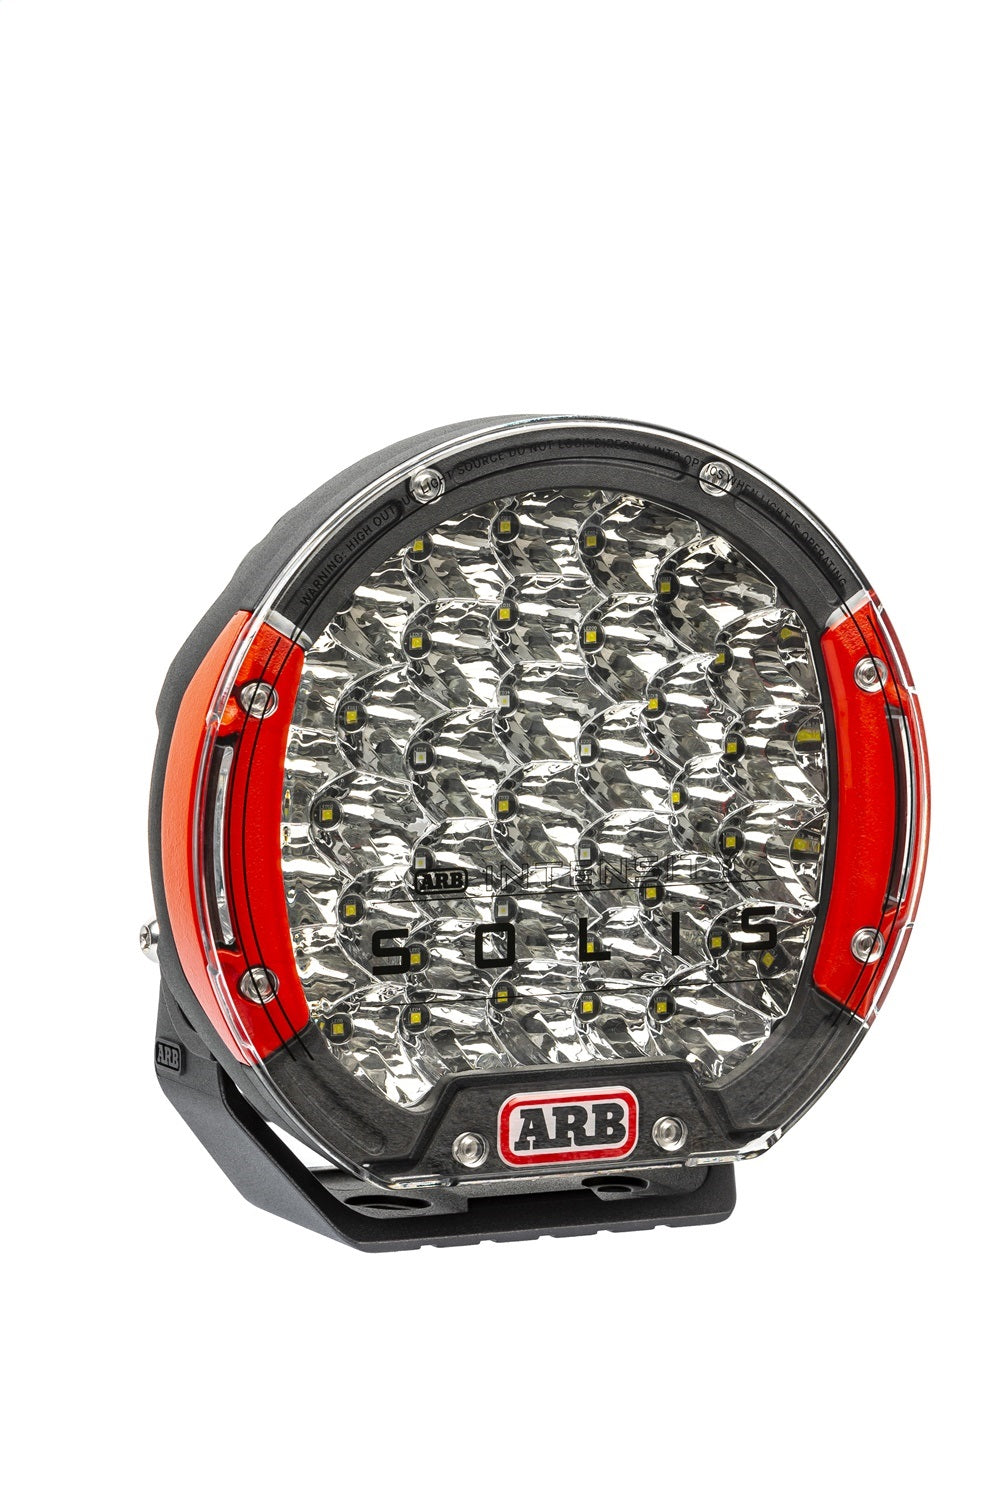 ARB 4x4 Accessories SJB36S Intensity SOLIS LED Driving Light